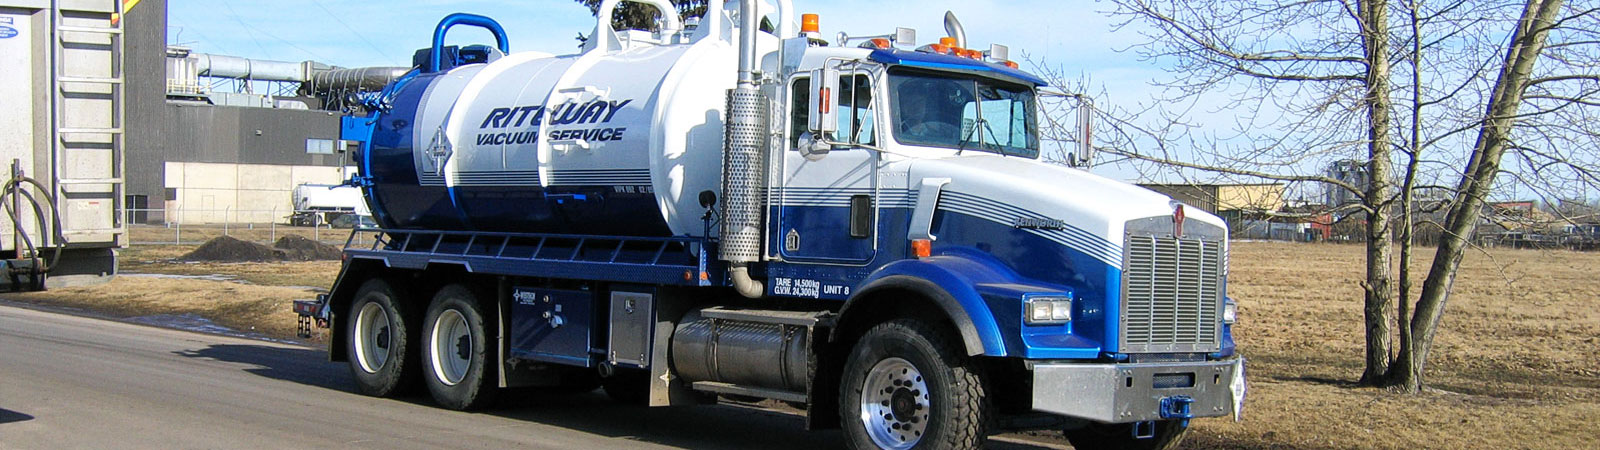 tandem vac truck for sewage hauling in Edmonton